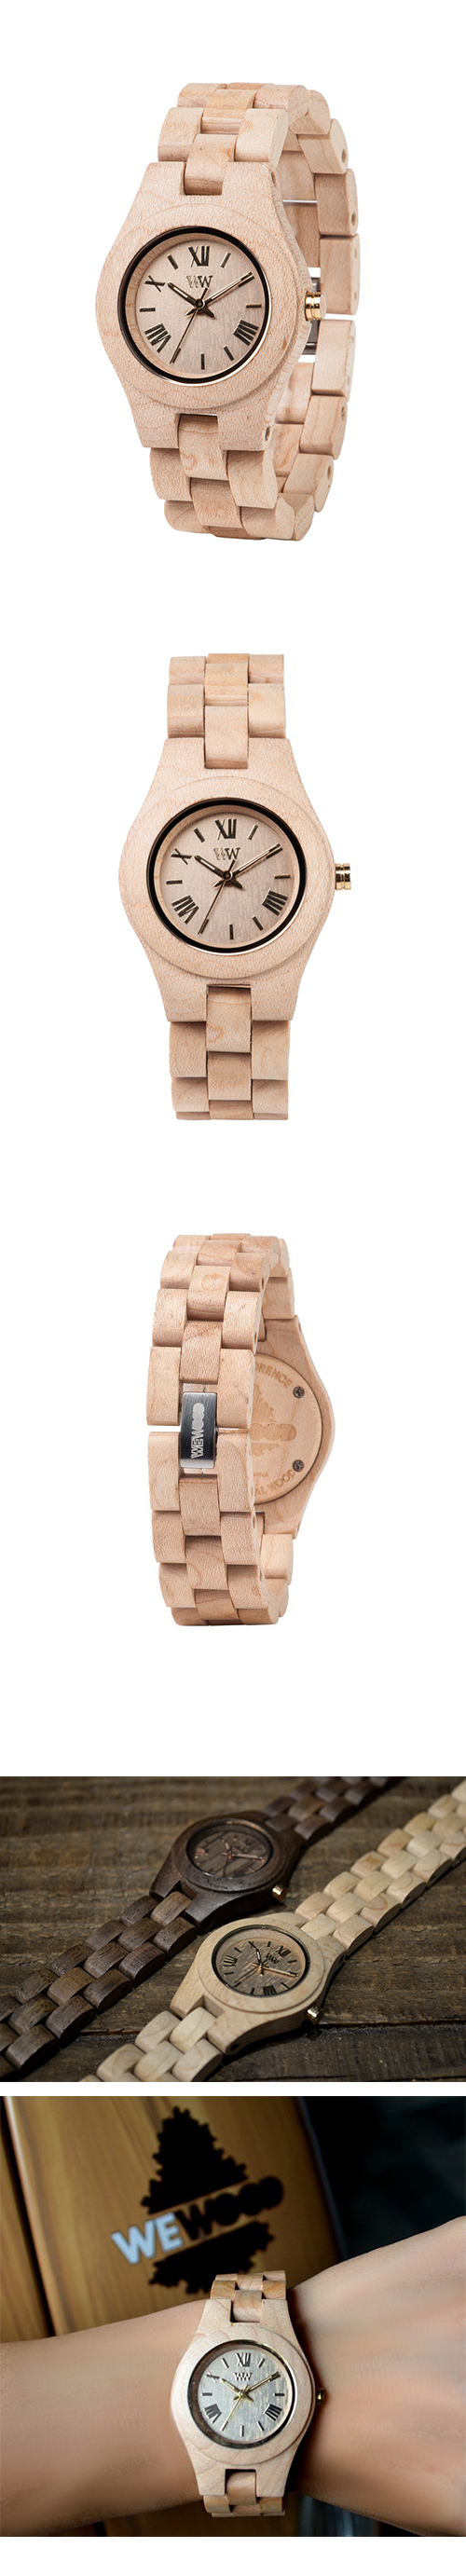 WEWOOD 義大利時尚木頭腕錶 經典羅馬系列 Criss Beige